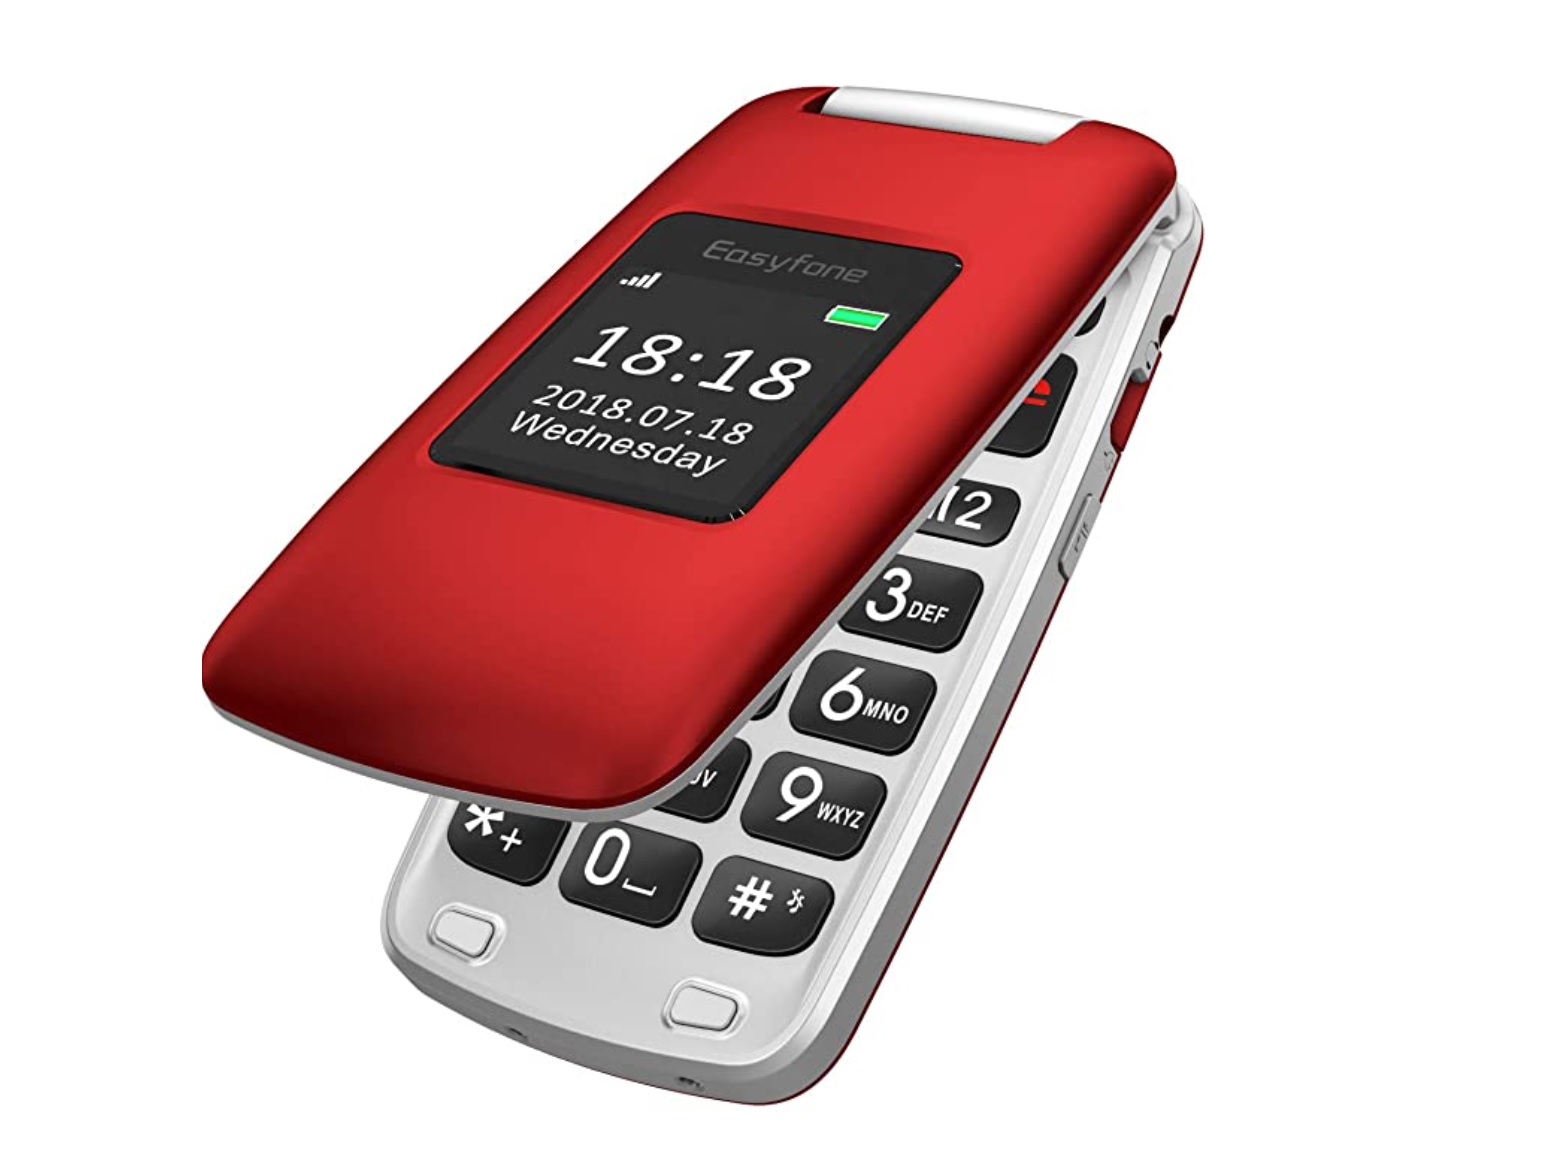 Easyfone mobiele telefoon Prime-A1 